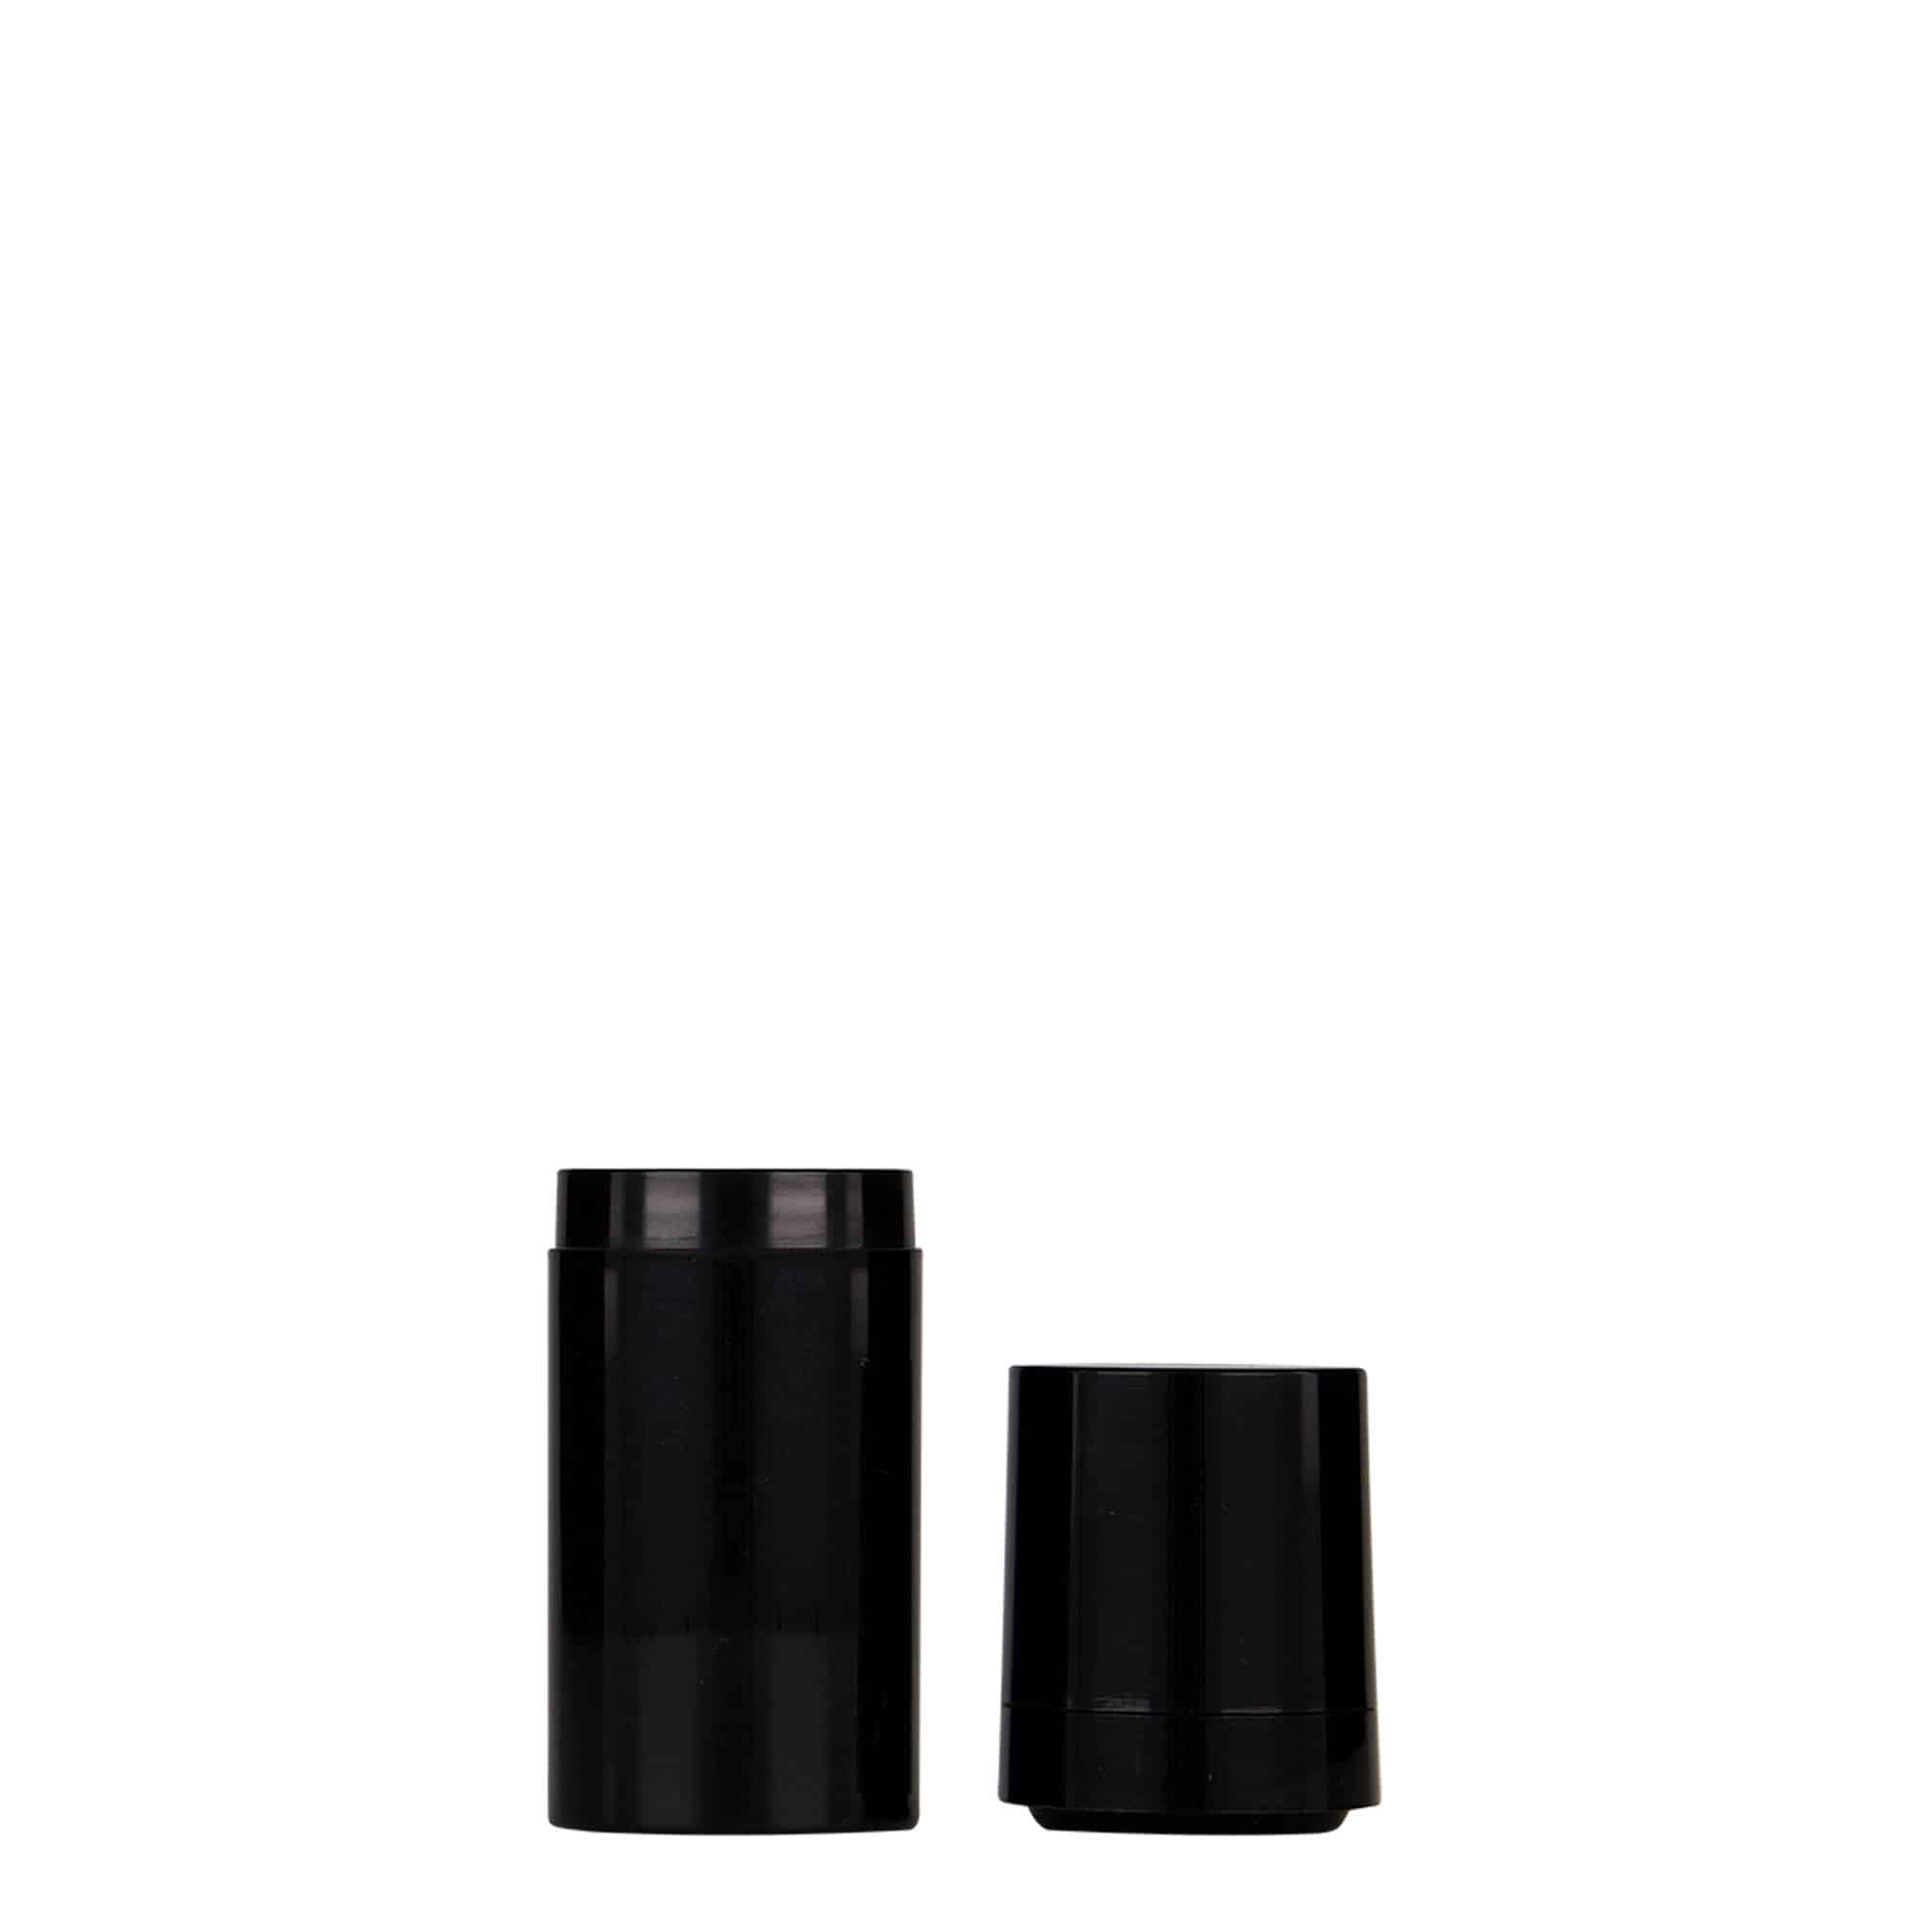 15 ml airless dispenser 'Micro', PP plastic, black